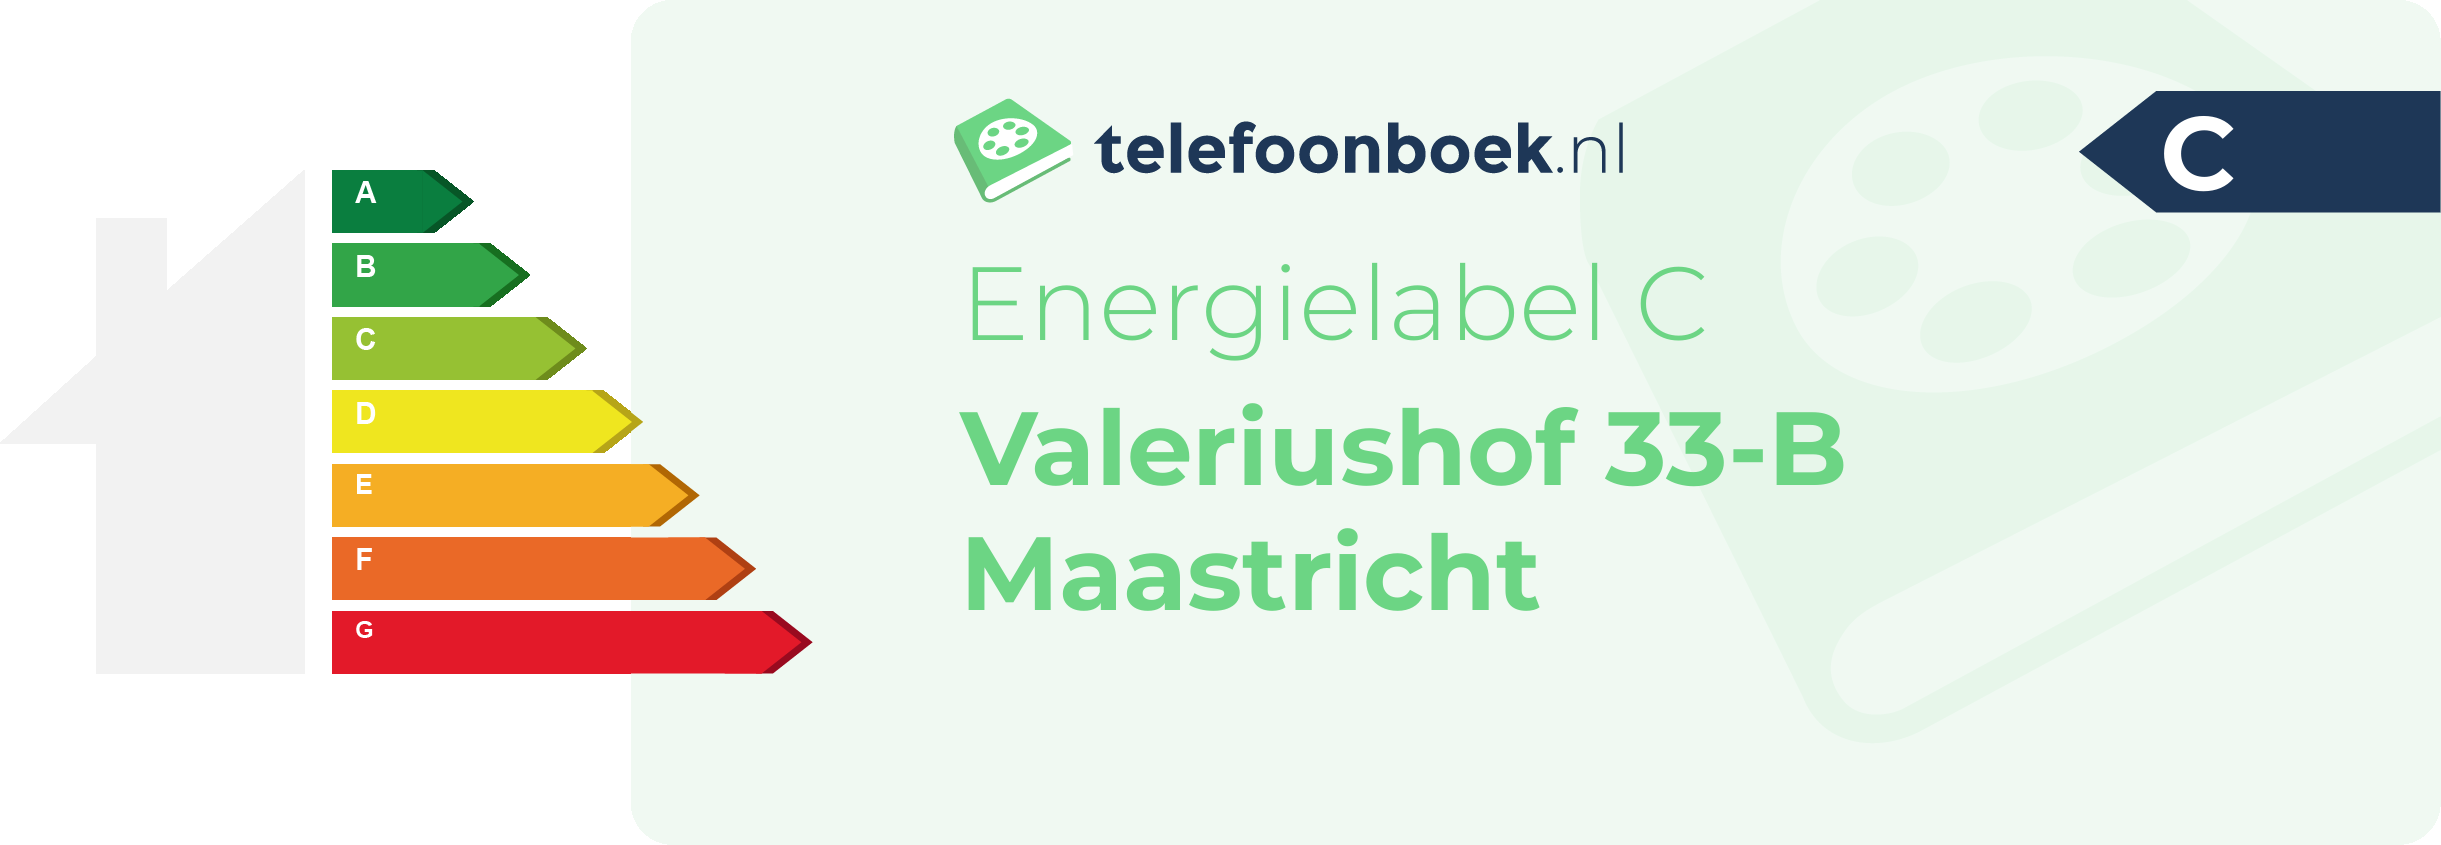 Energielabel Valeriushof 33-B Maastricht